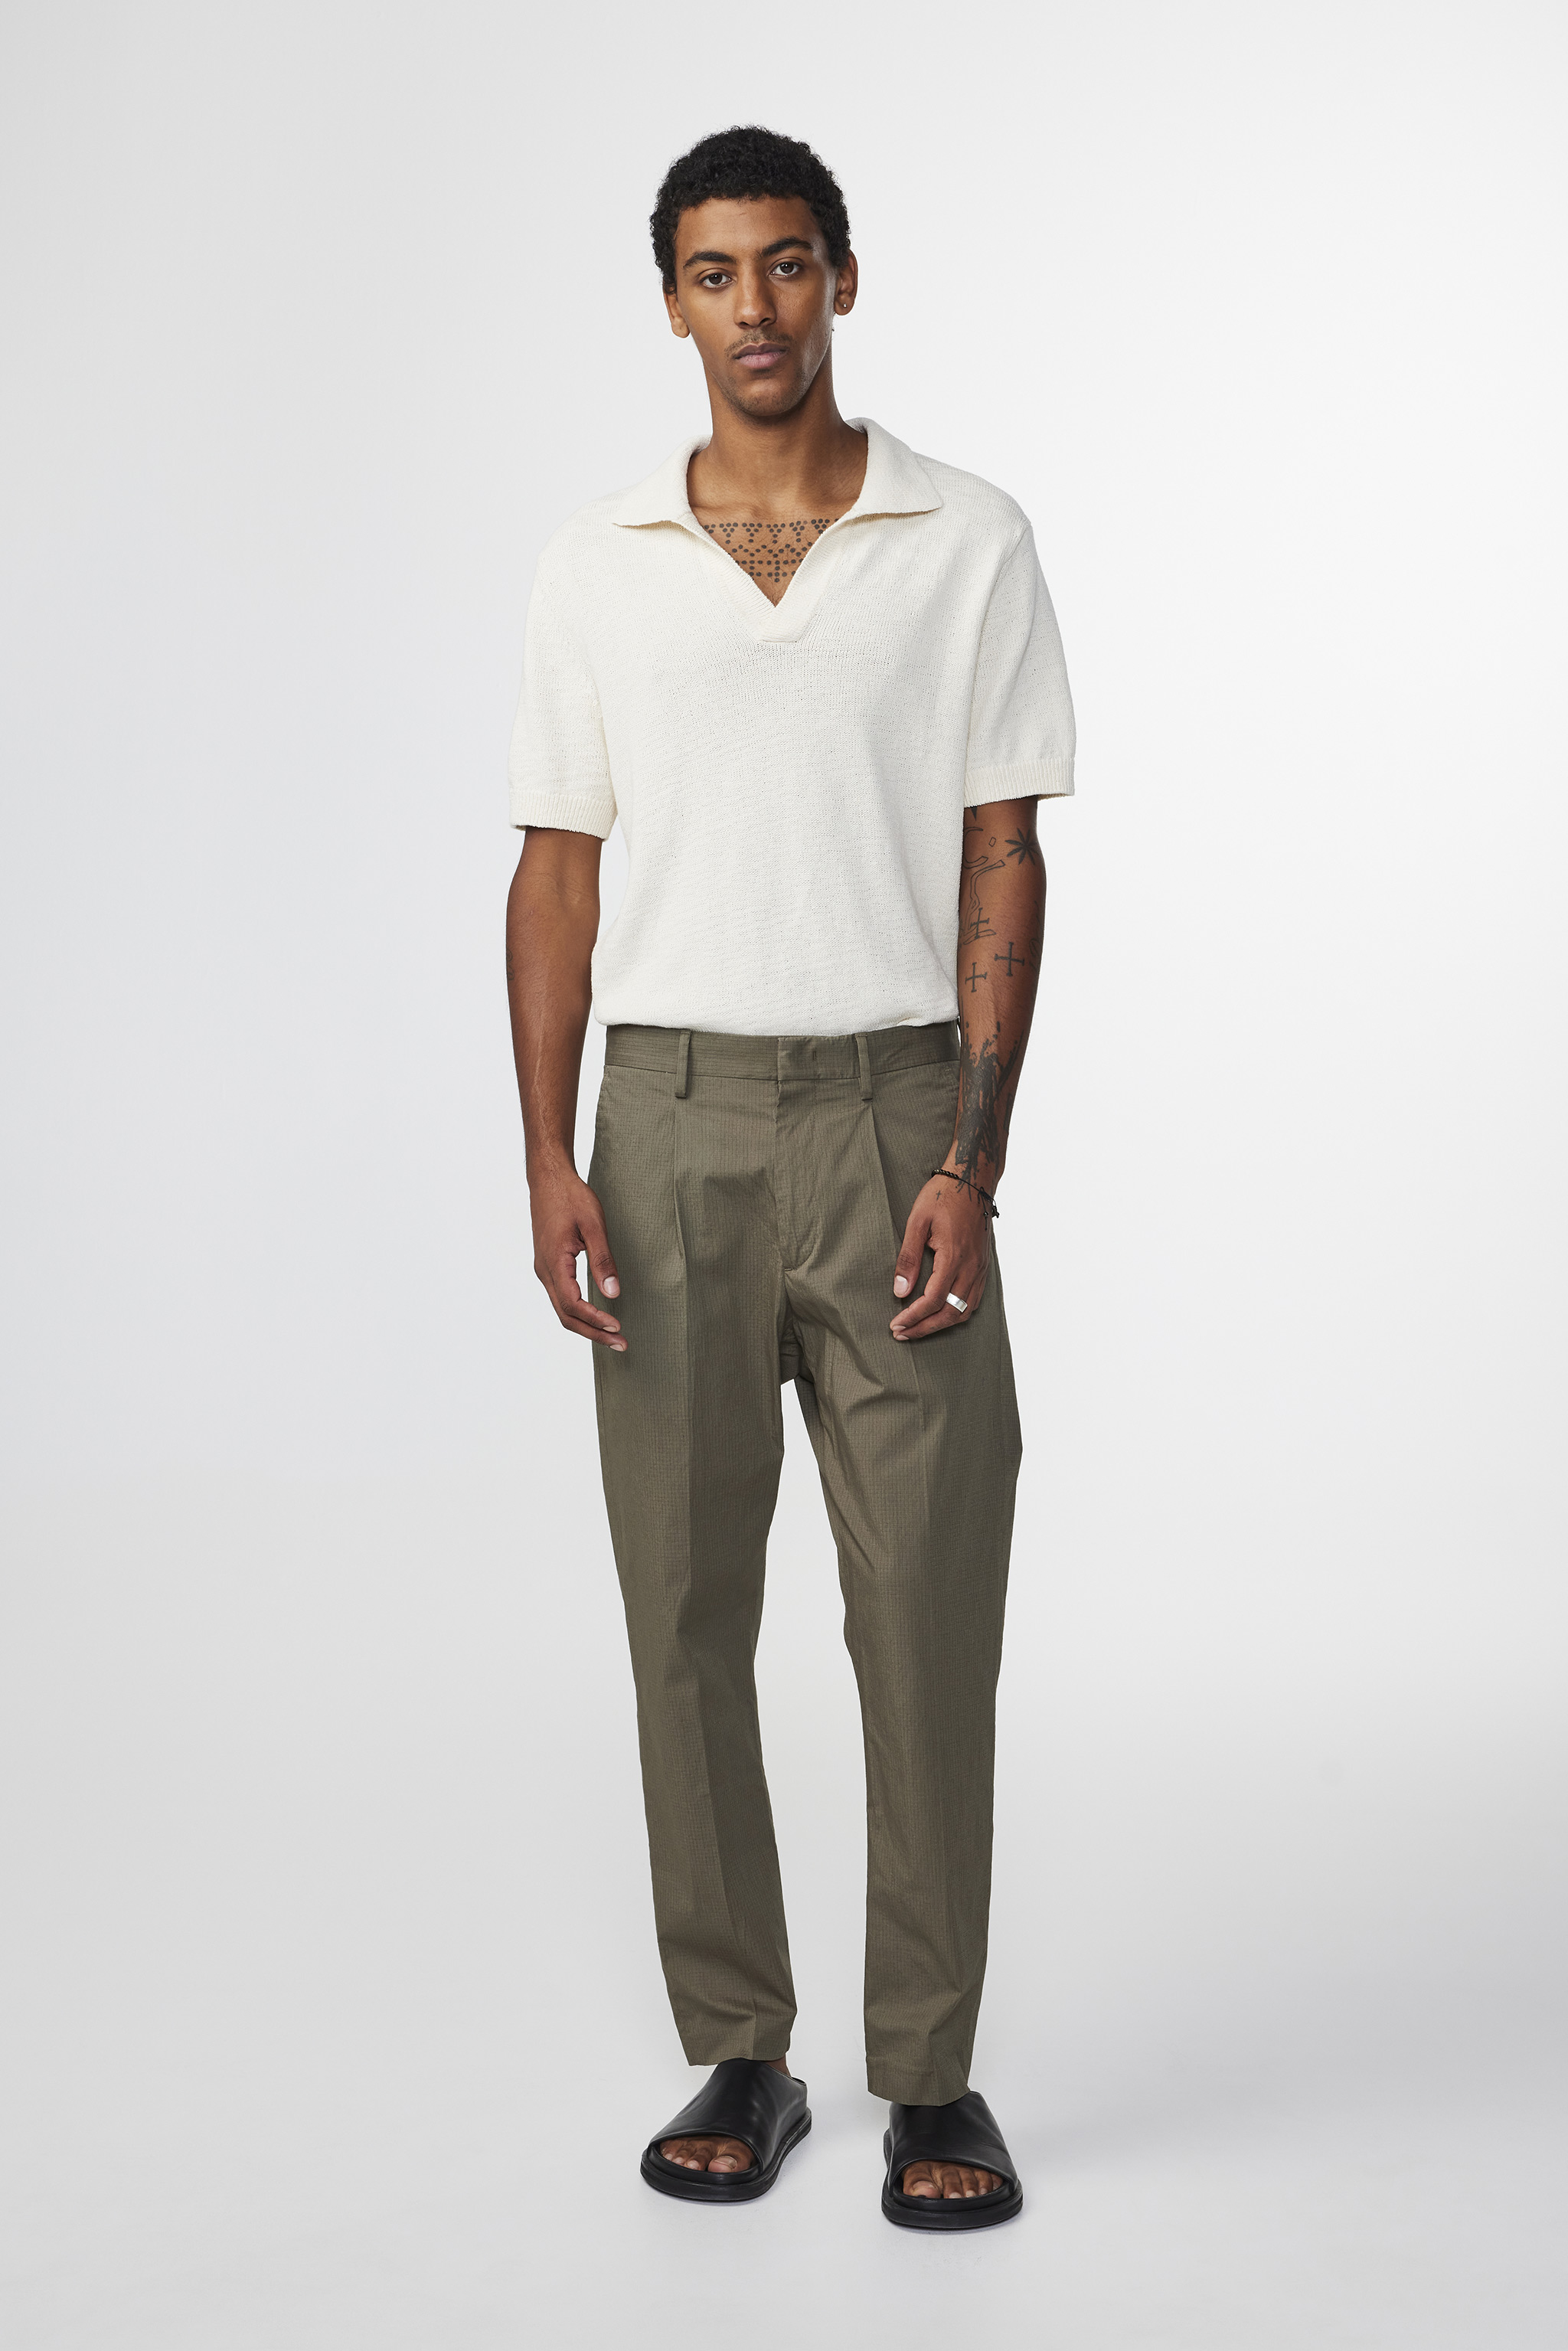 Marco Polo Linen Pant F/L | Linen pants, Pants, Linen